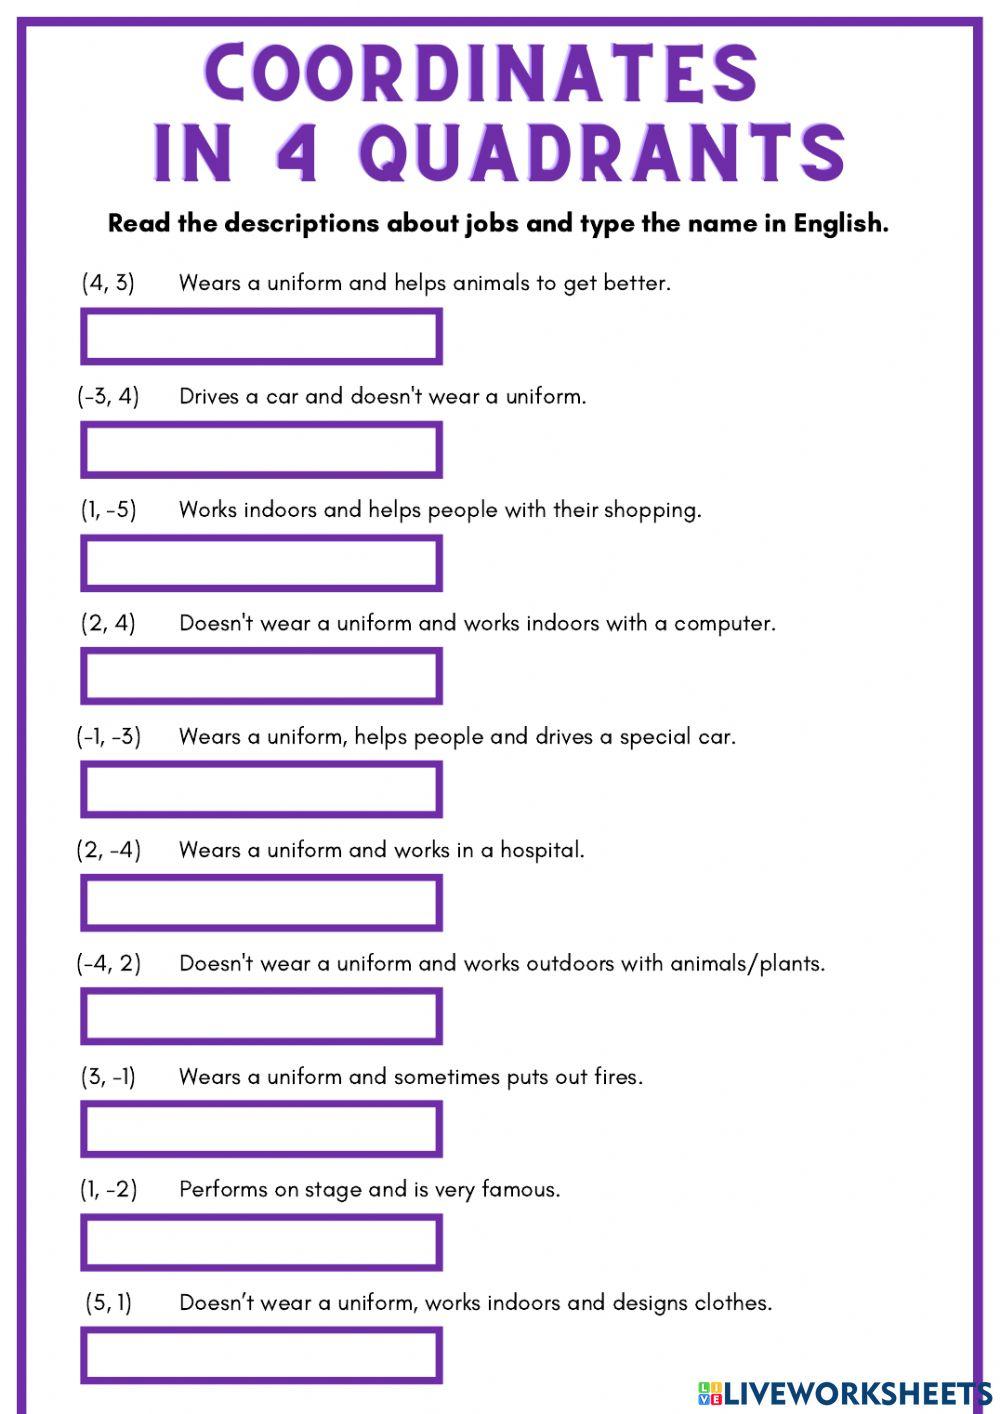 Coordinates 4 quadrants English vocabulary jobs